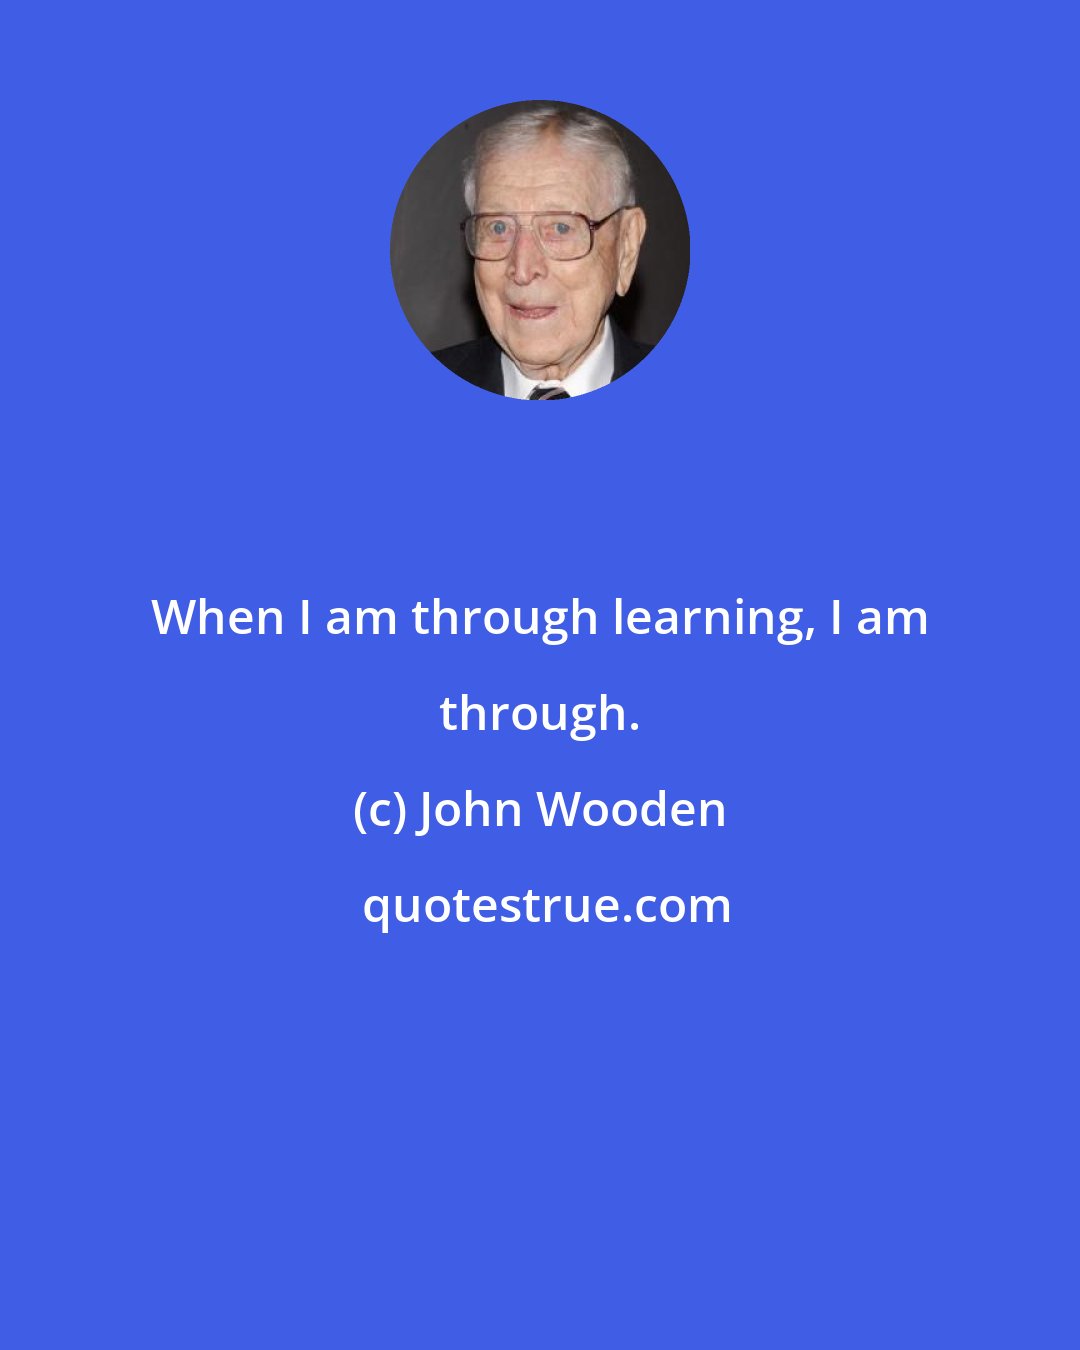 John Wooden: When I am through learning, I am through.